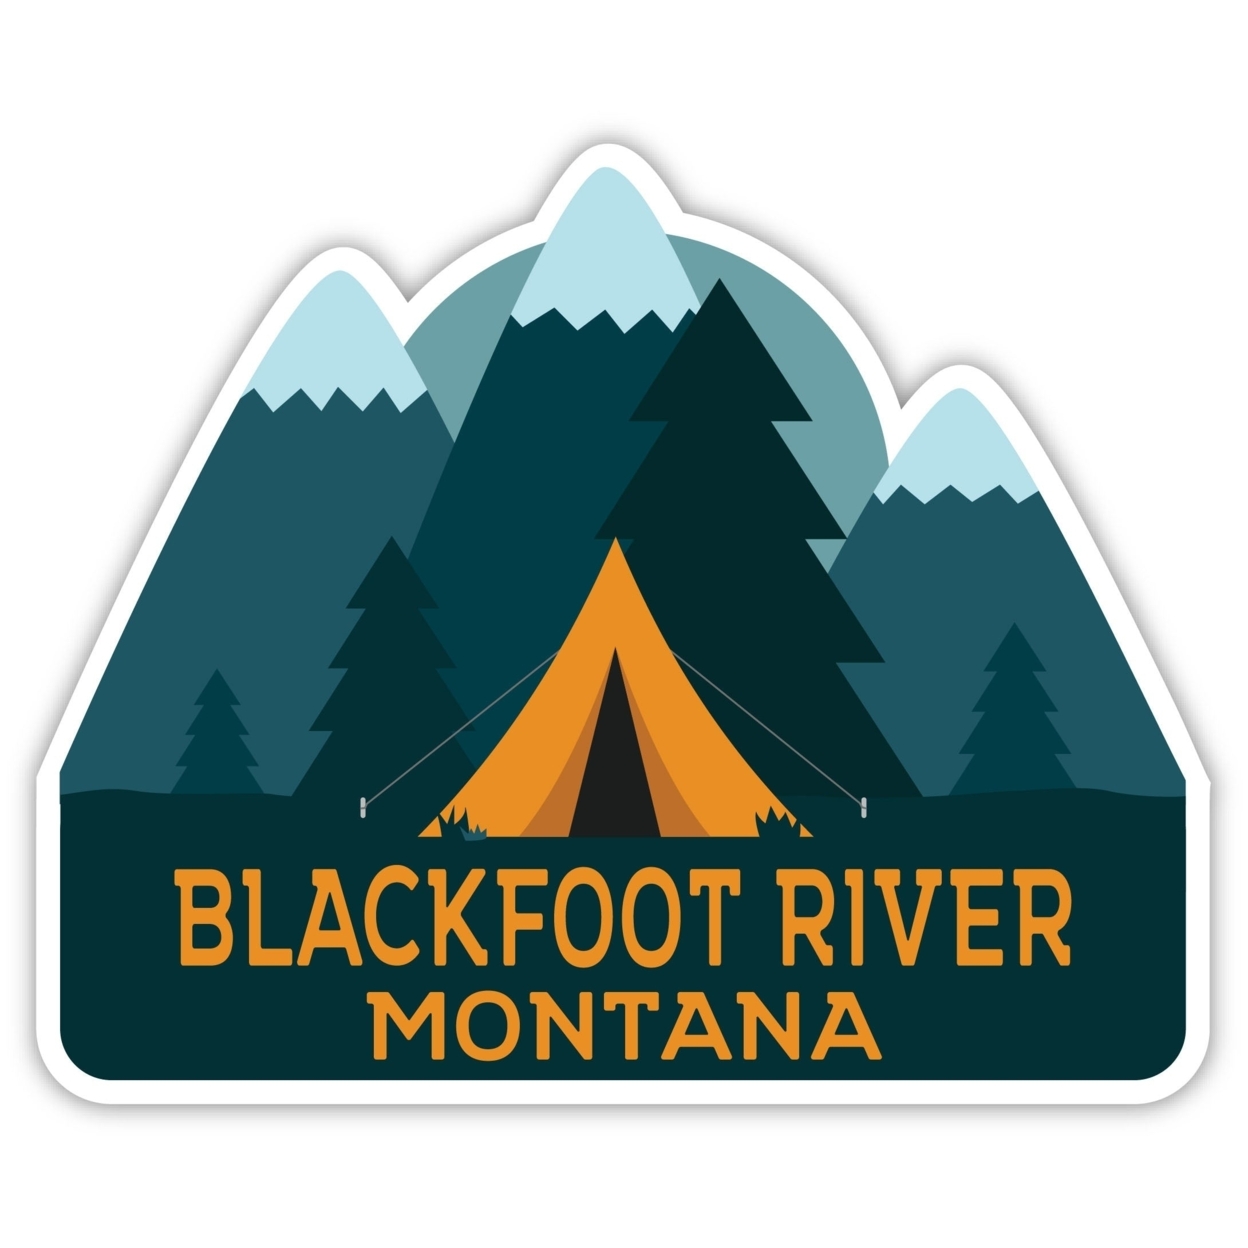 Blackfoot River Montana Souvenir Decorative Stickers (Choose Theme And Size) - Single Unit, 8-Inch, Tent